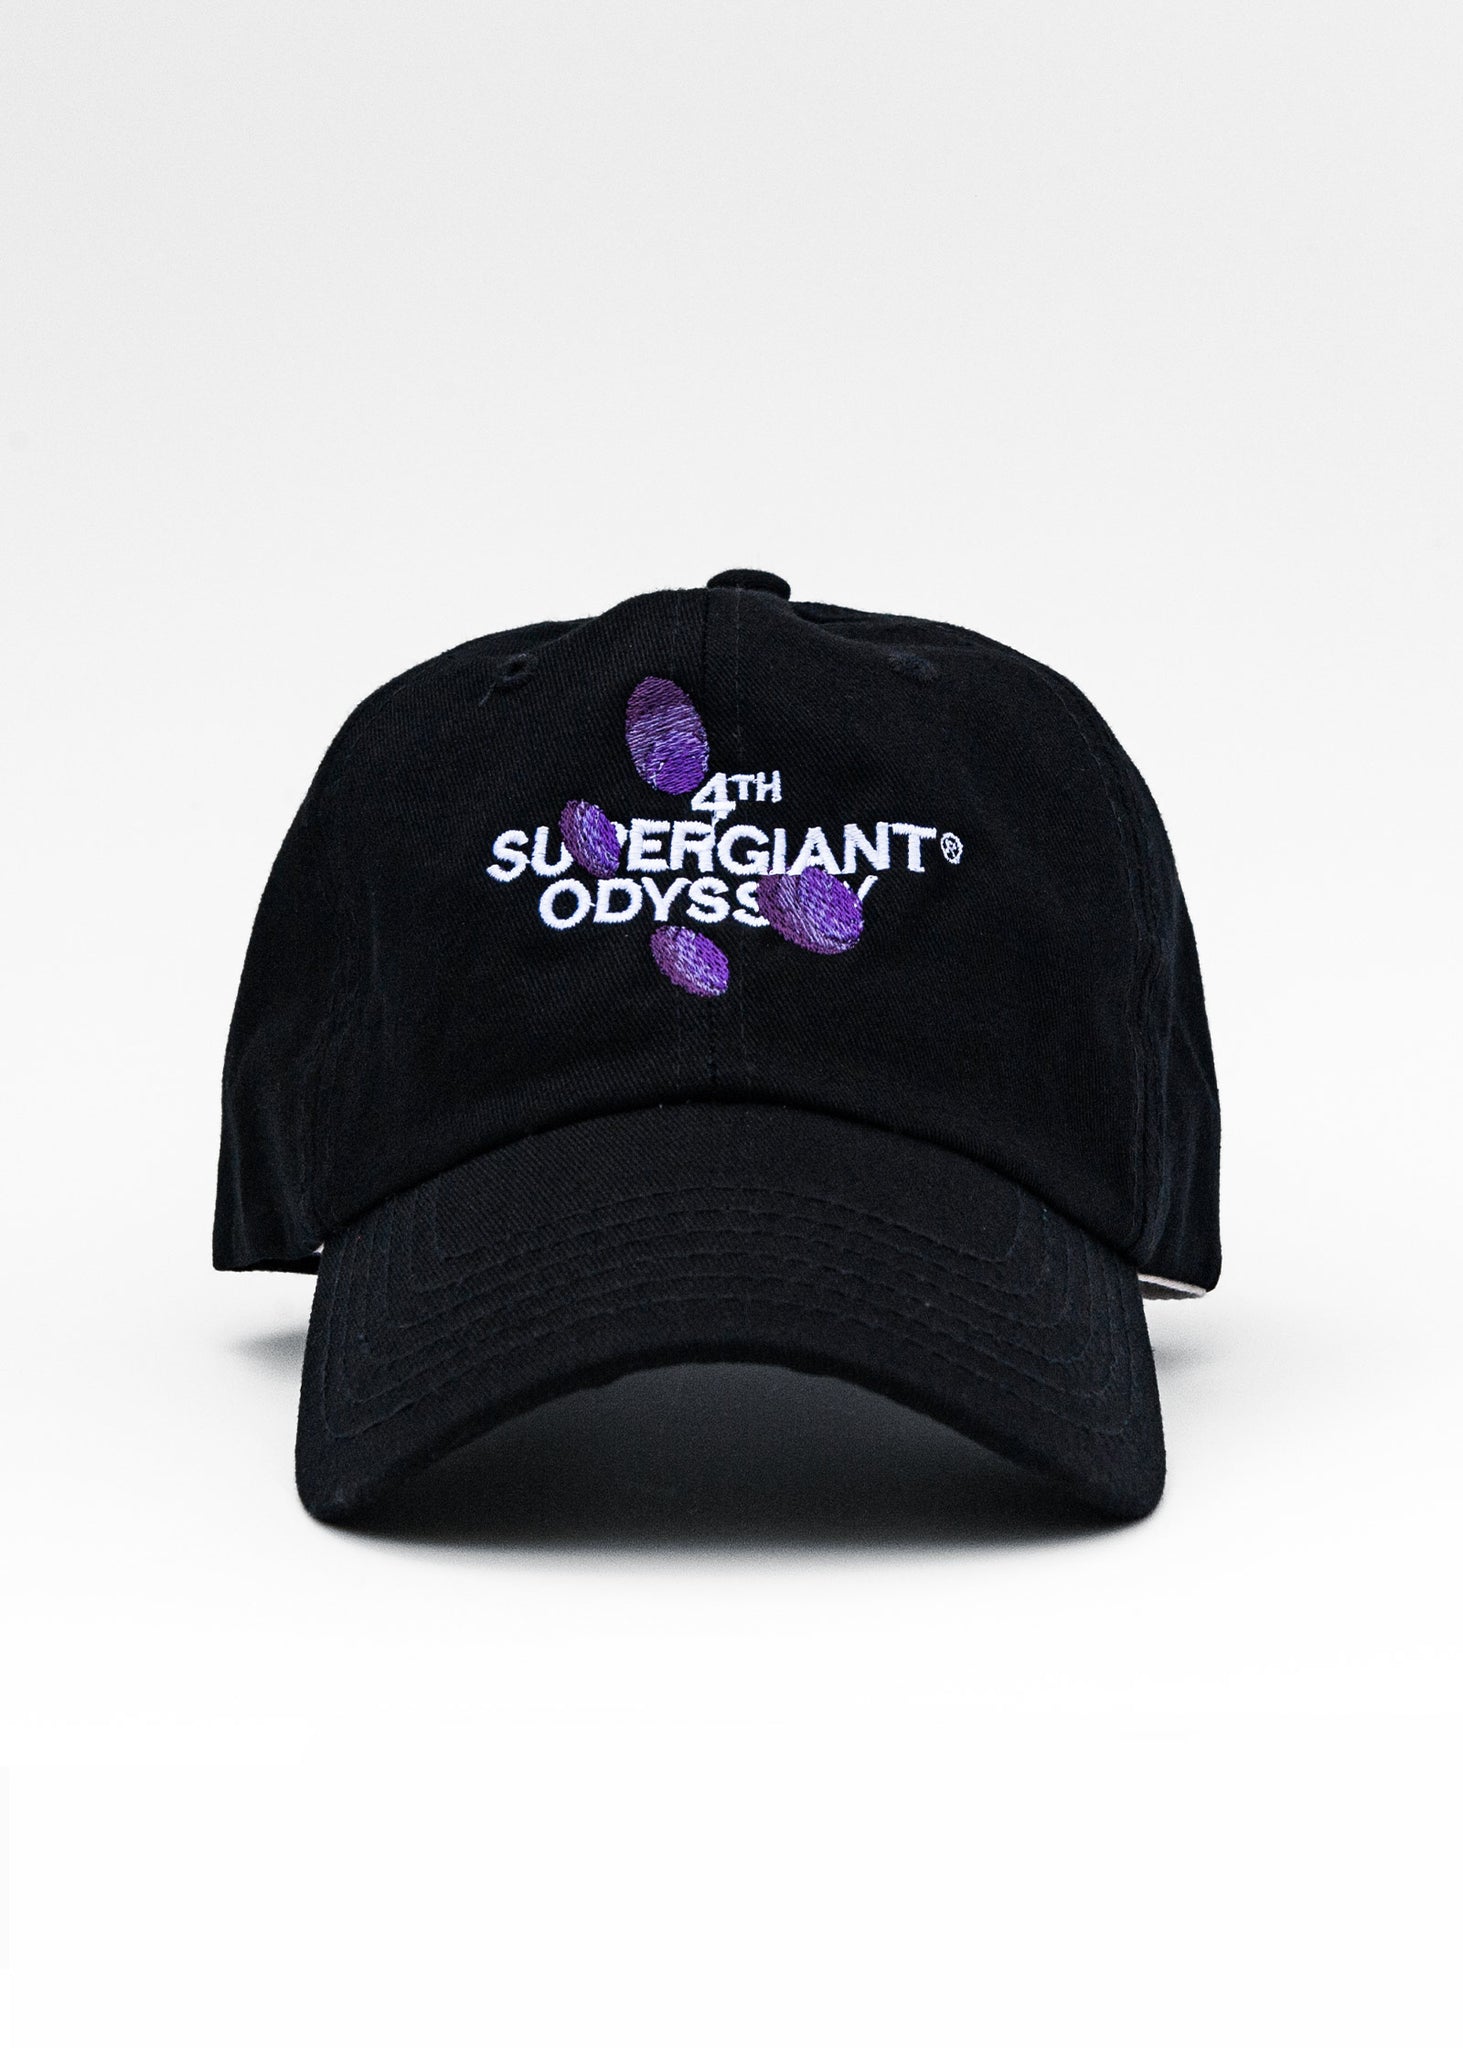 SUPERGIANT® 4TH ODYSSEY CAP WHITE ON BLACK